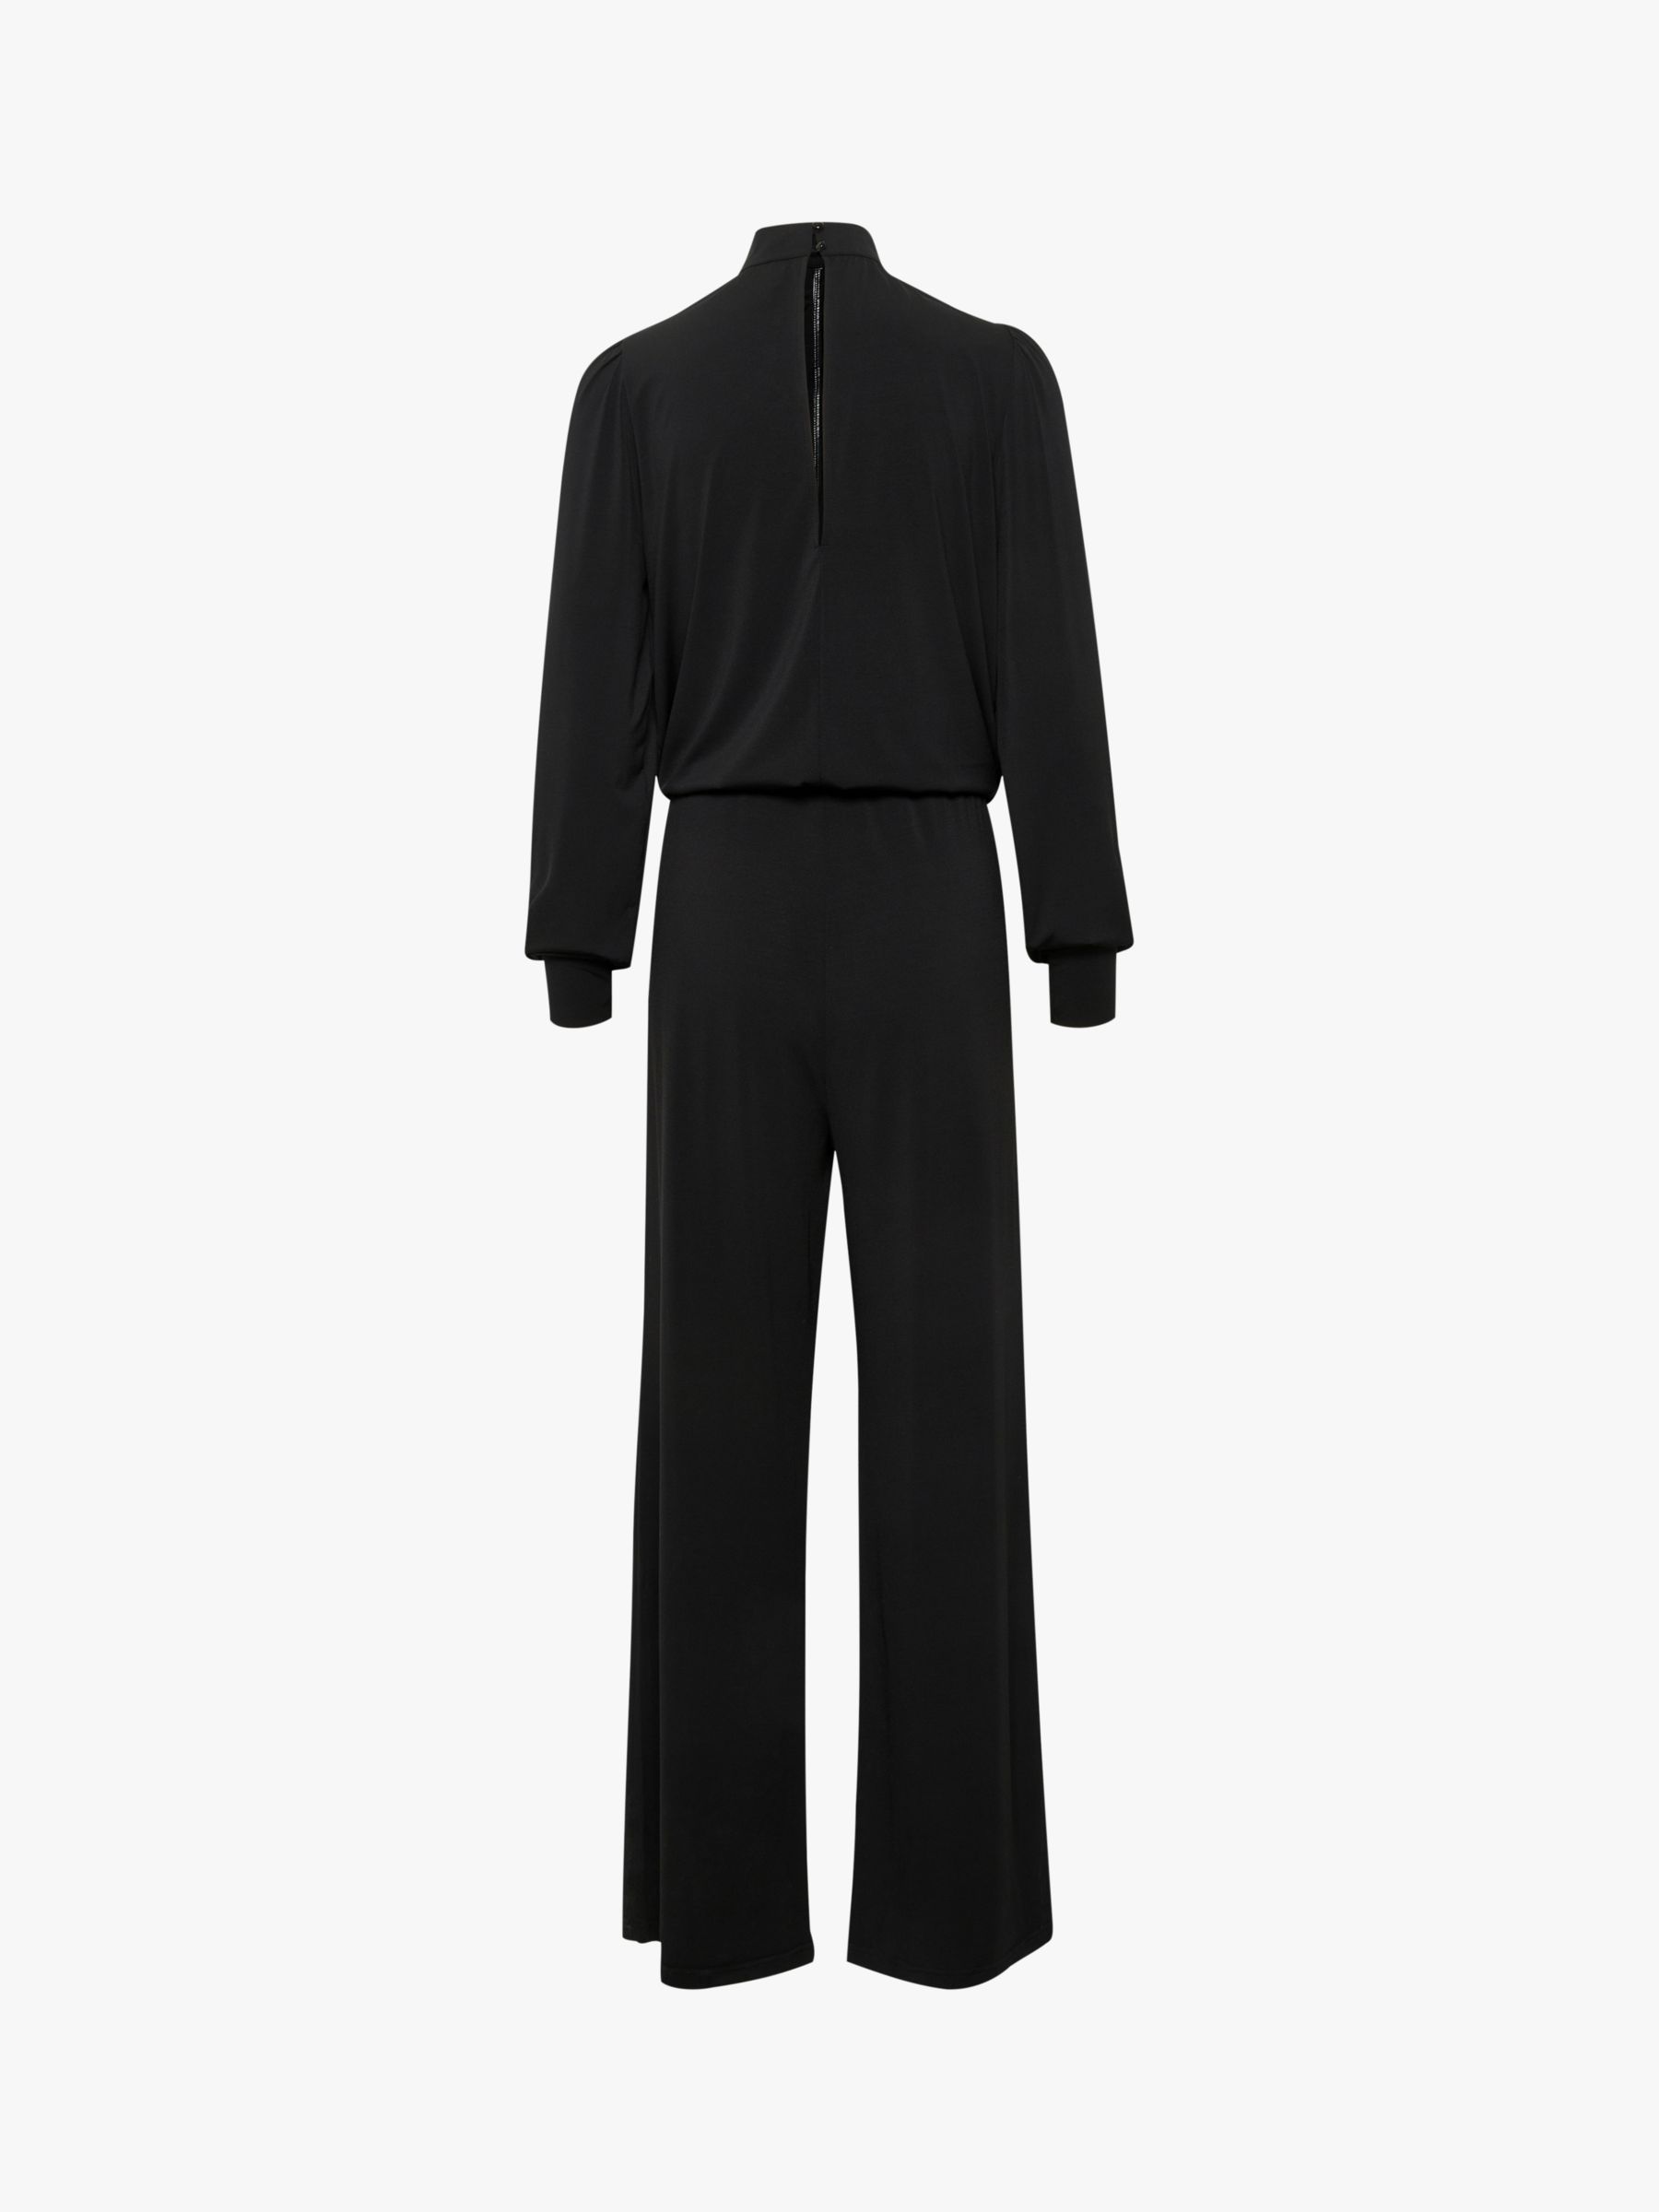 KAFFE Melody Long Sleeve Jumpsuit, Black at John Lewis & Partners